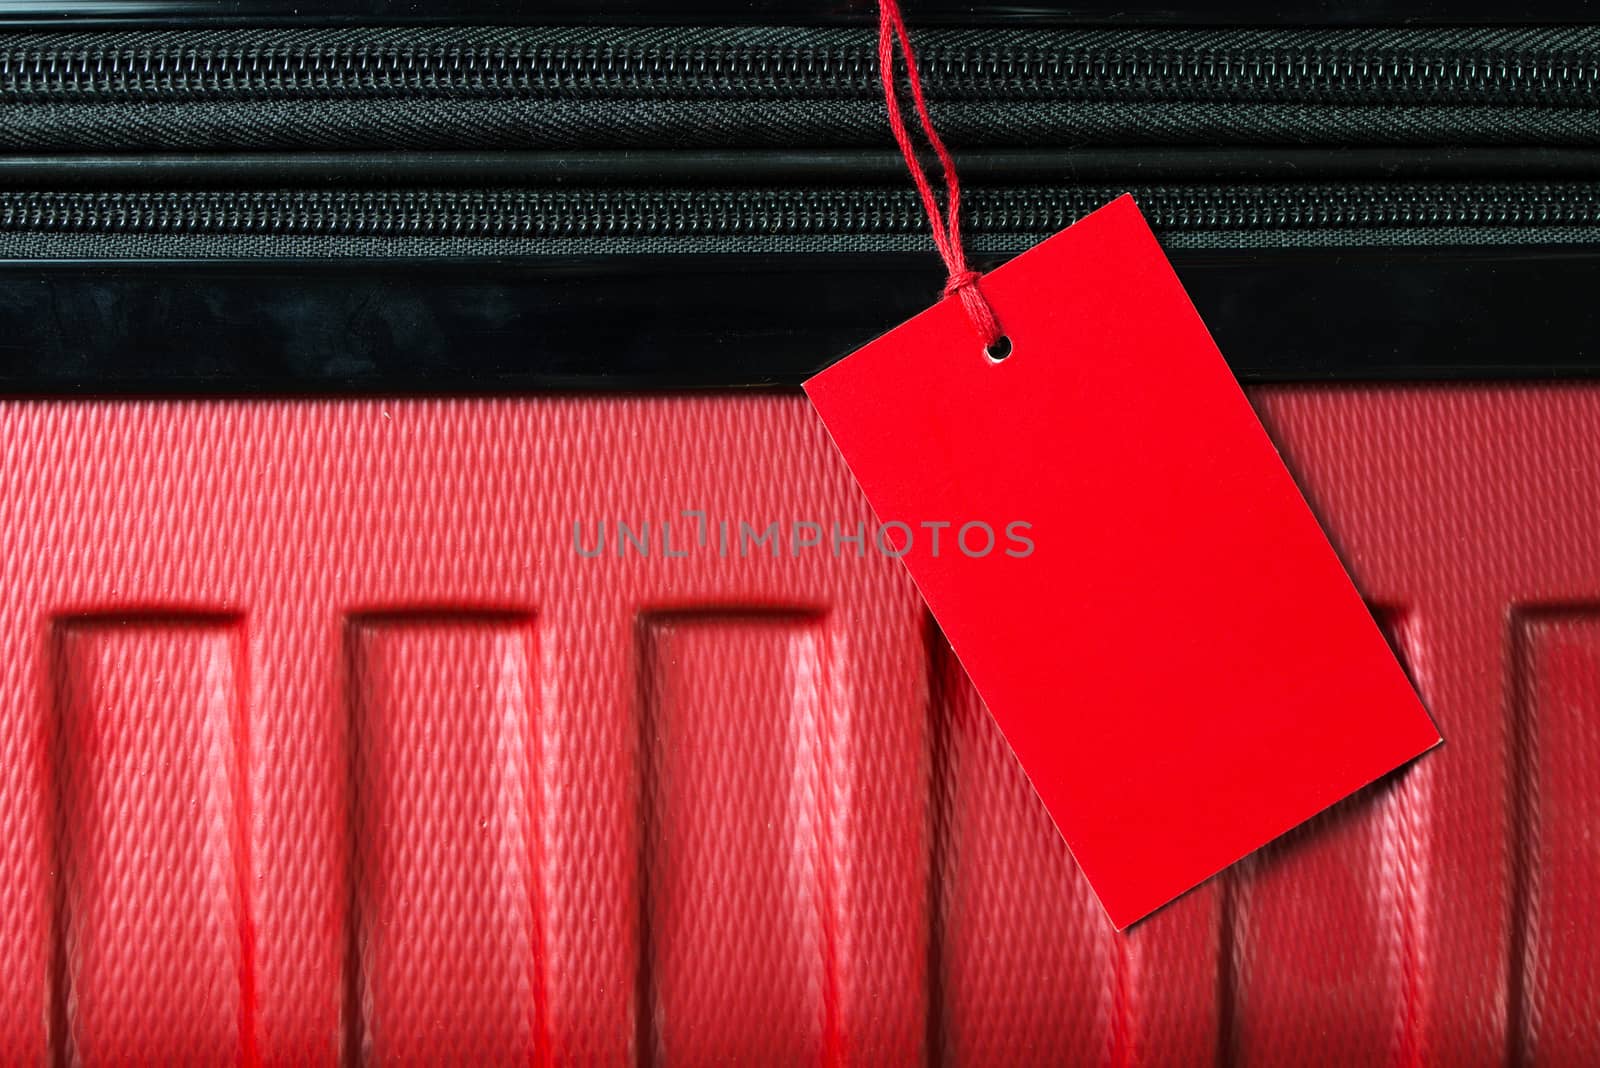 Empty travel luggage label by Kenishirotie